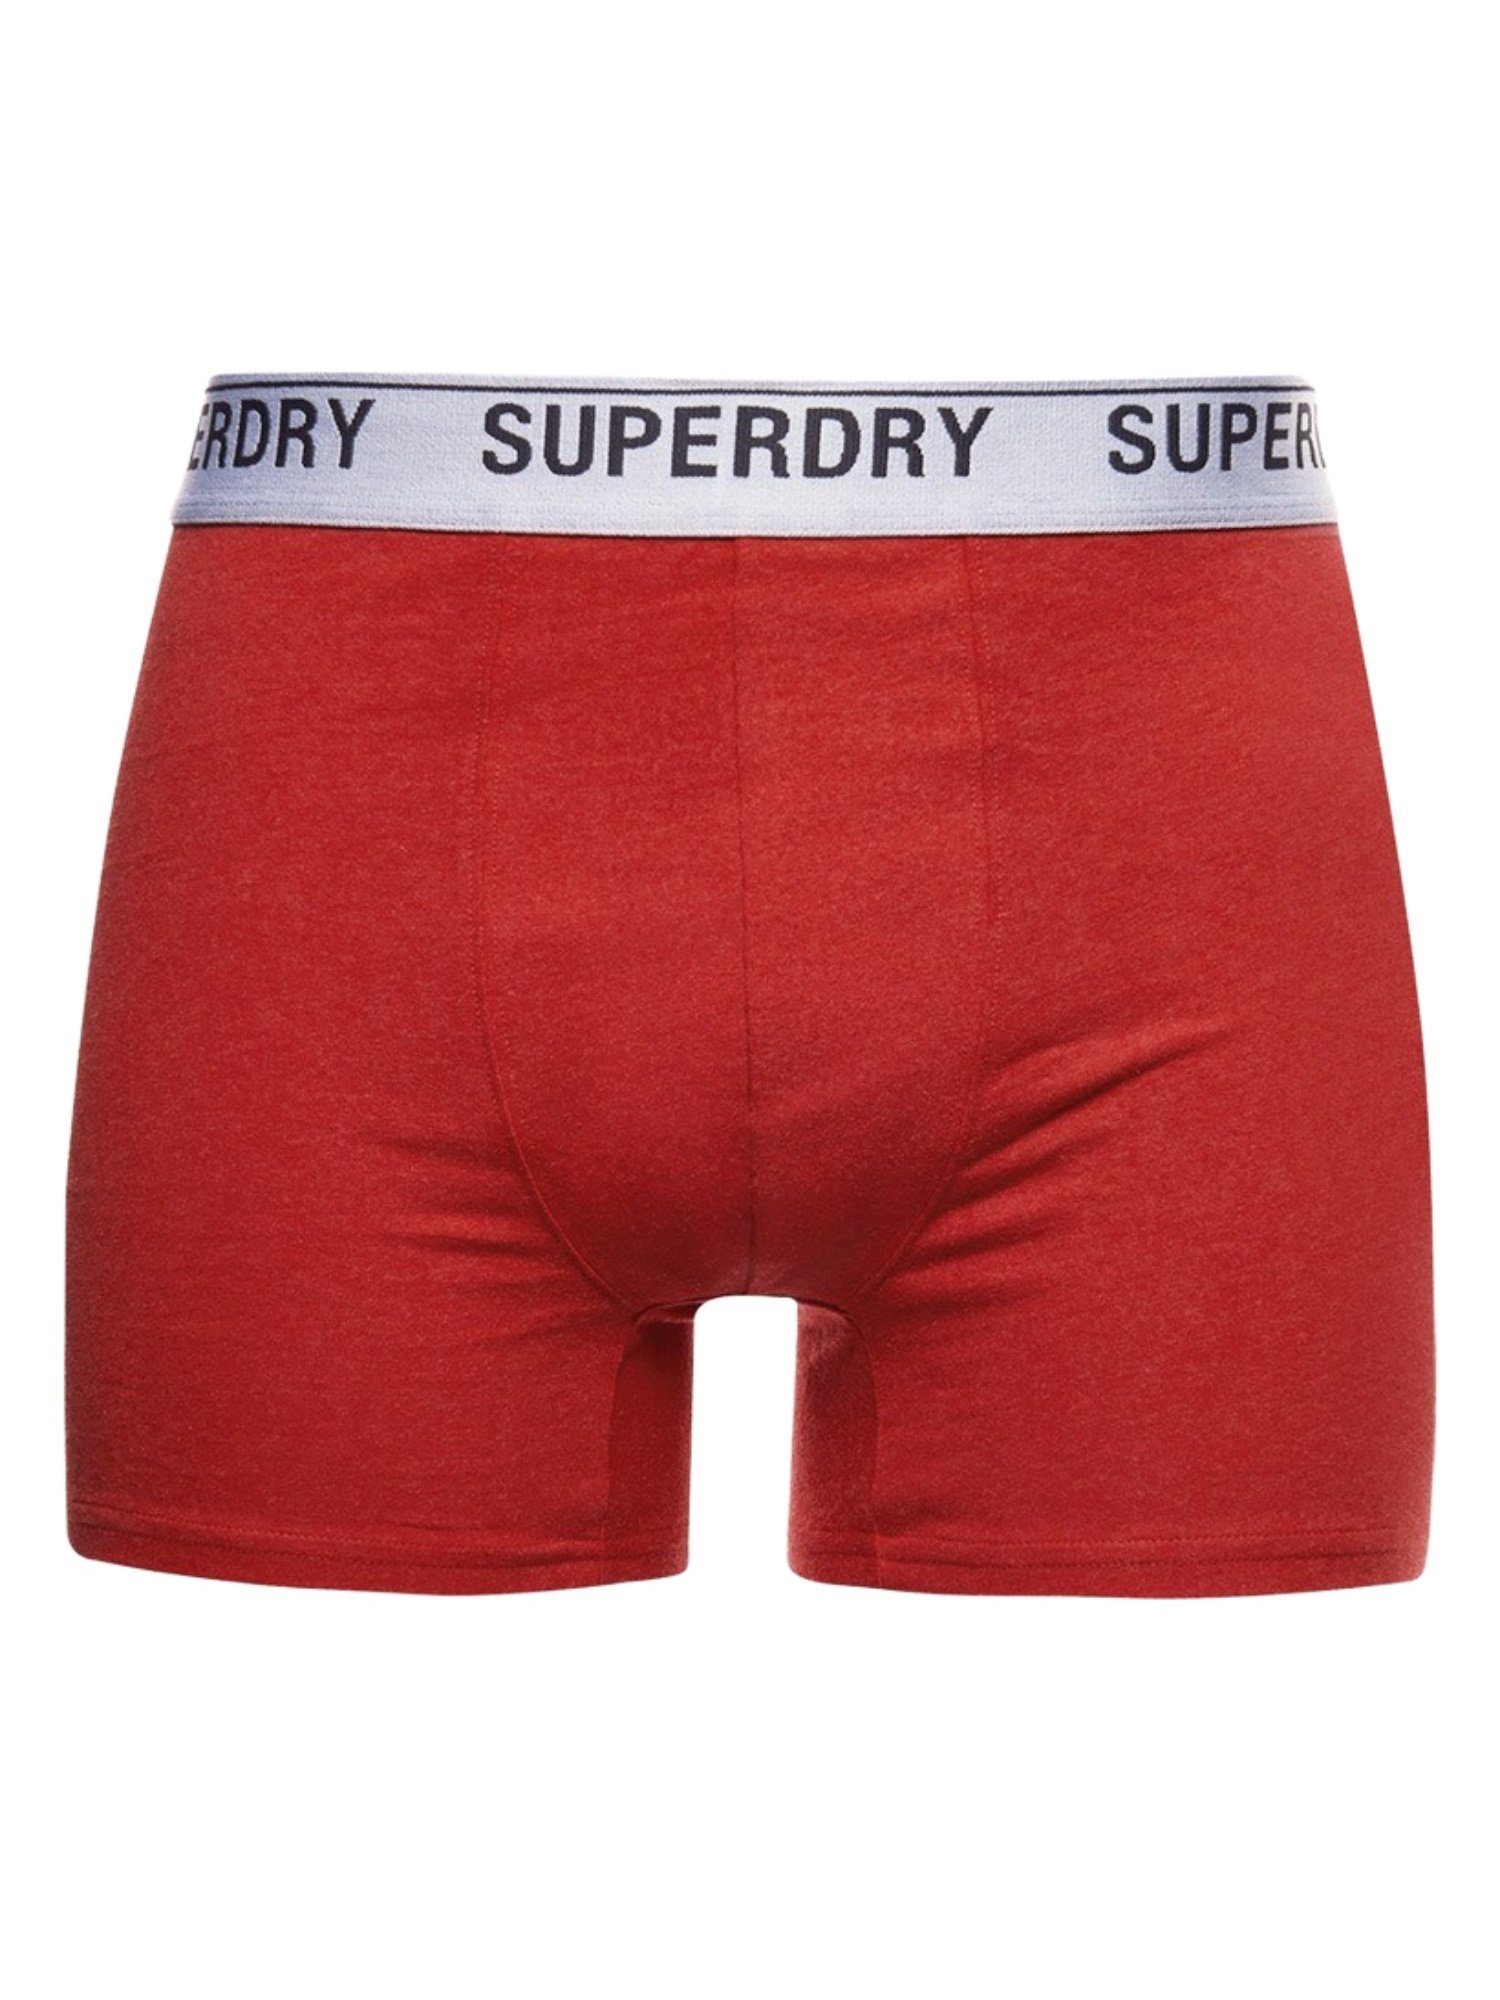 Boxershorts 3er Boxershorts Enganliegende Superdry Unterhose rot (3-St) Trunks